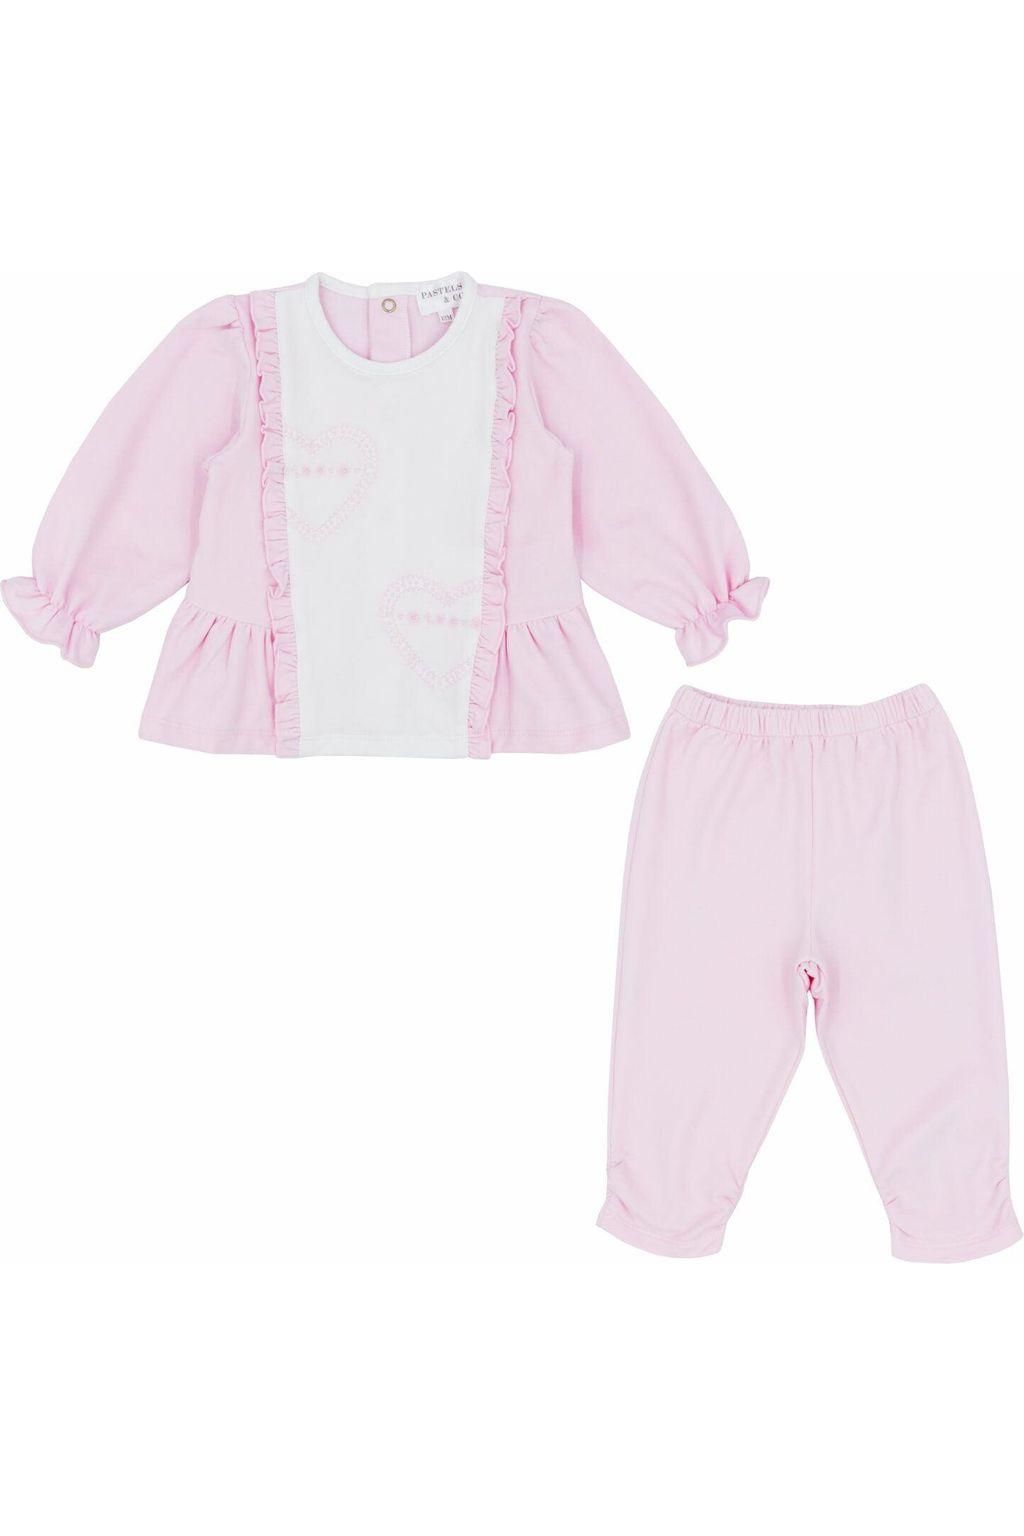 Pastels & Co Girls Pink Jilly Set 036B Dainty Delilah 